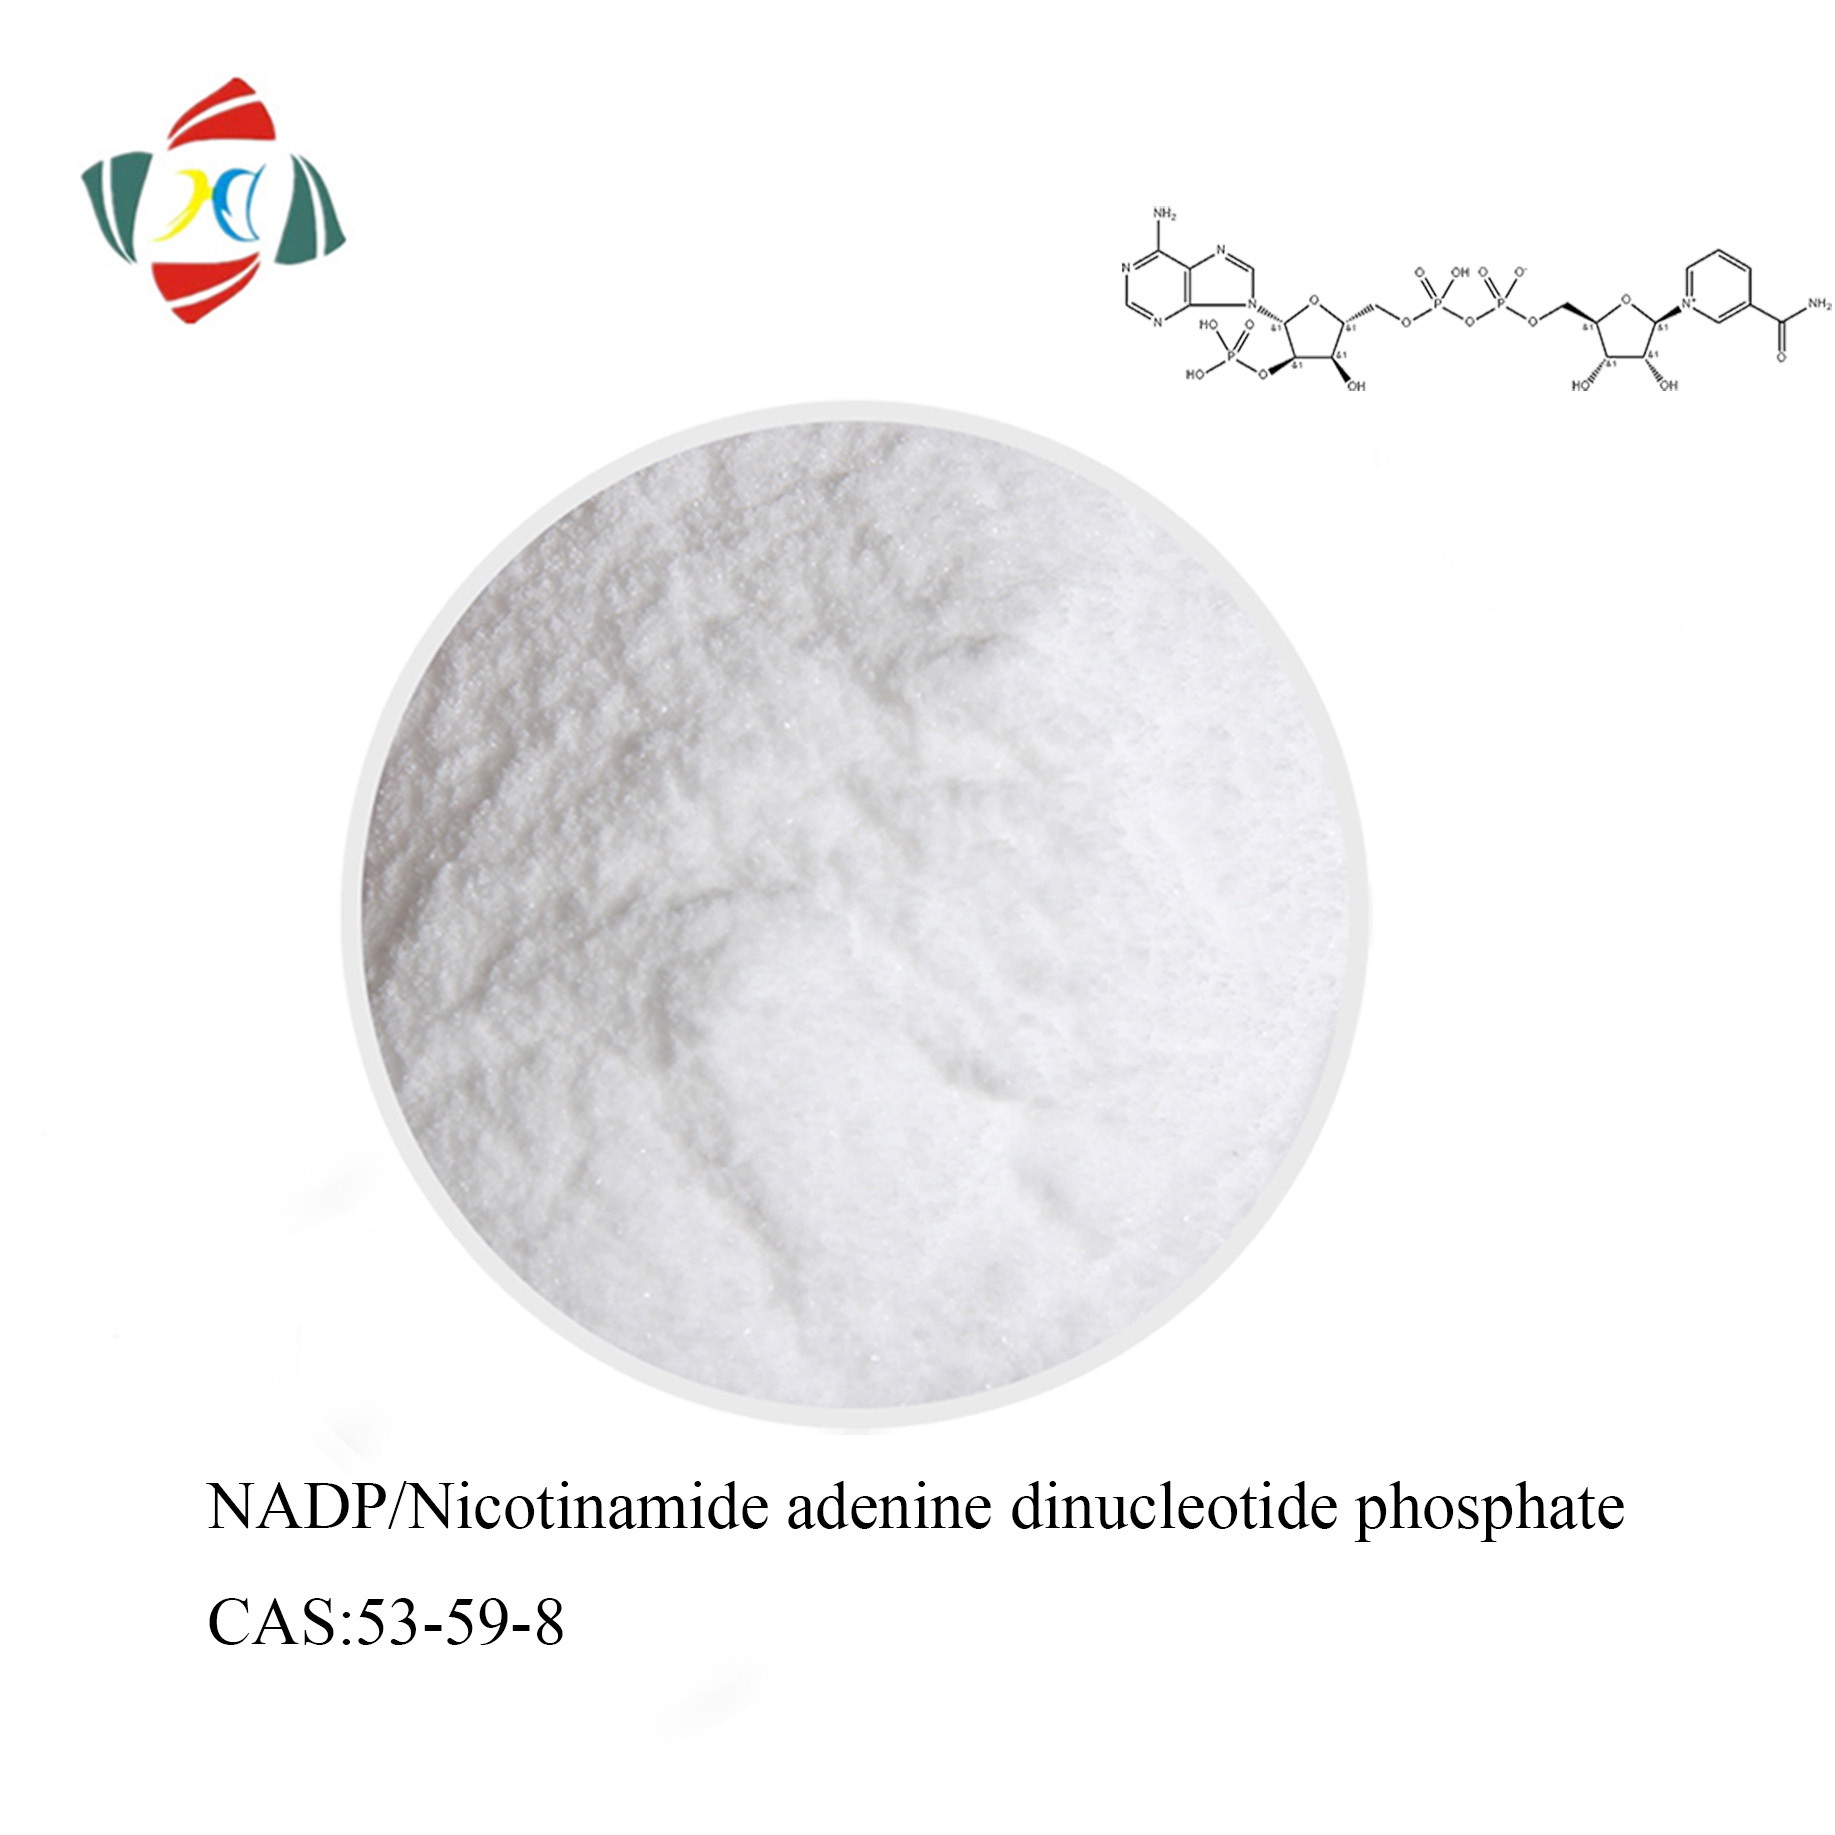 Kup Fosforan dinukleotydu beta-nikotynamidoadeninowego / NADP CAS 53-59-8,Fosforan dinukleotydu beta-nikotynamidoadeninowego / NADP CAS 53-59-8 Cena,Fosforan dinukleotydu beta-nikotynamidoadeninowego / NADP CAS 53-59-8 marki,Fosforan dinukleotydu beta-nikotynamidoadeninowego / NADP CAS 53-59-8 Producent,Fosforan dinukleotydu beta-nikotynamidoadeninowego / NADP CAS 53-59-8 Cytaty,Fosforan dinukleotydu beta-nikotynamidoadeninowego / NADP CAS 53-59-8 spółka,